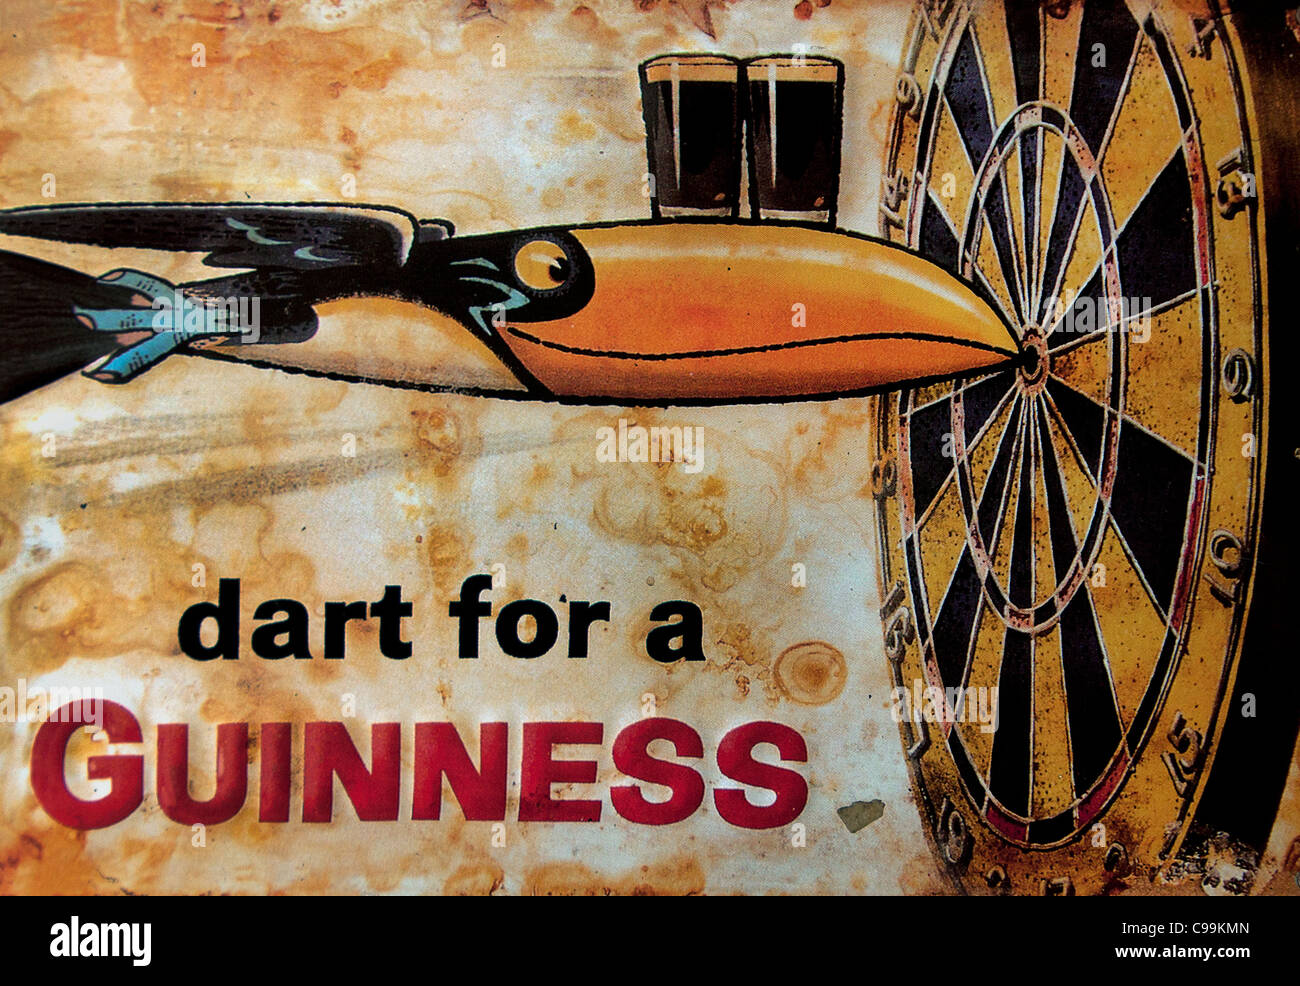 Dart for a Guinness Ireland Irish Darting Bar Pub Cafe Sport Sign Stock Photo